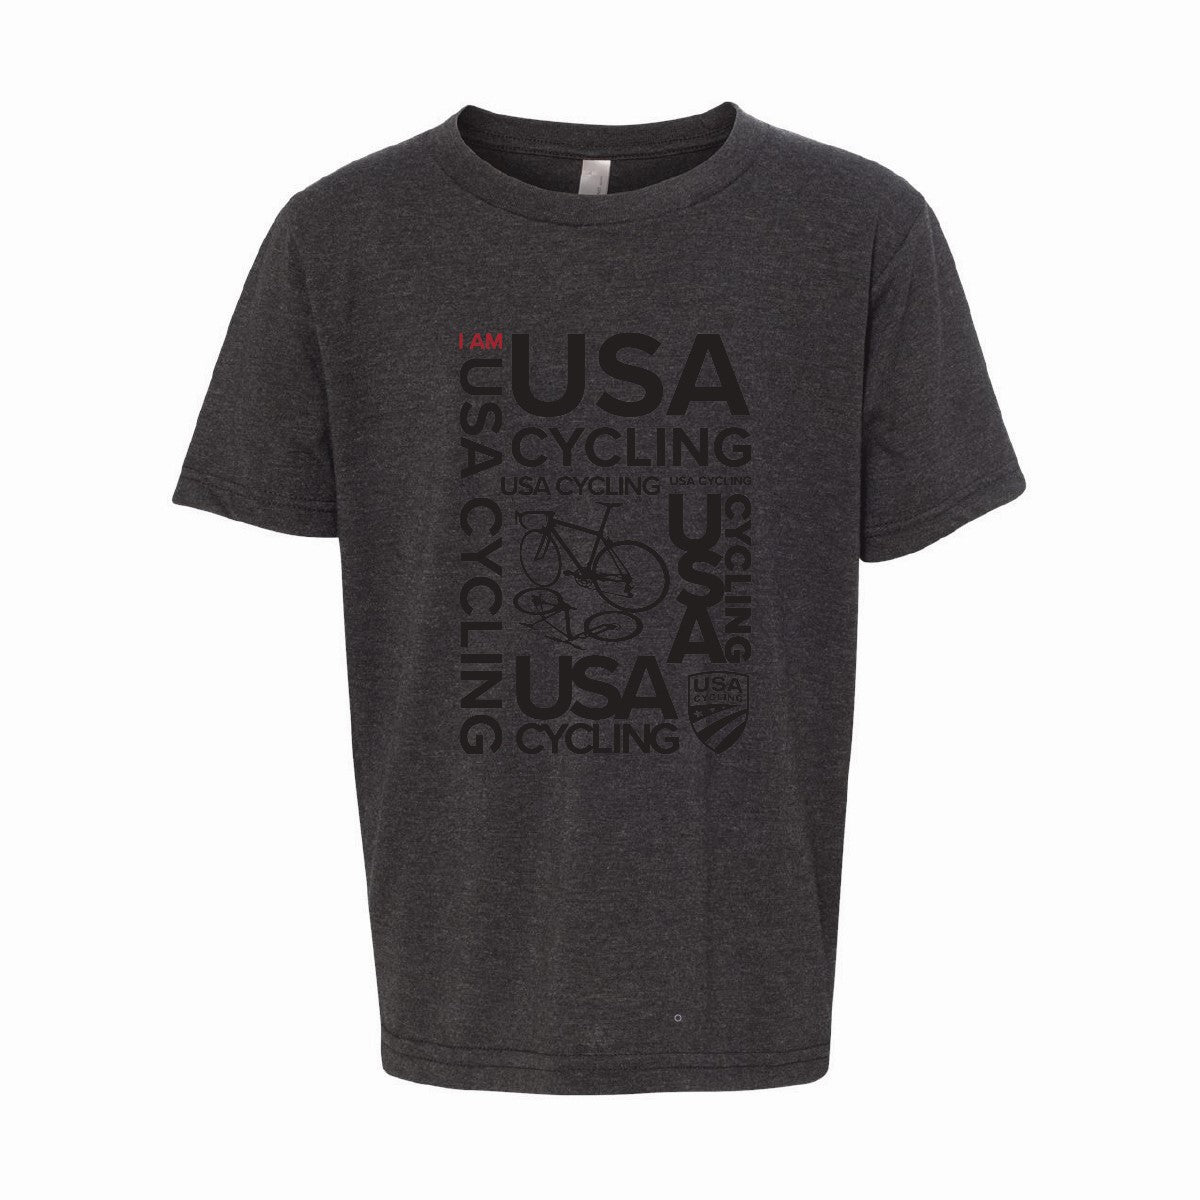 Kids I am USA Cycling T-shirt